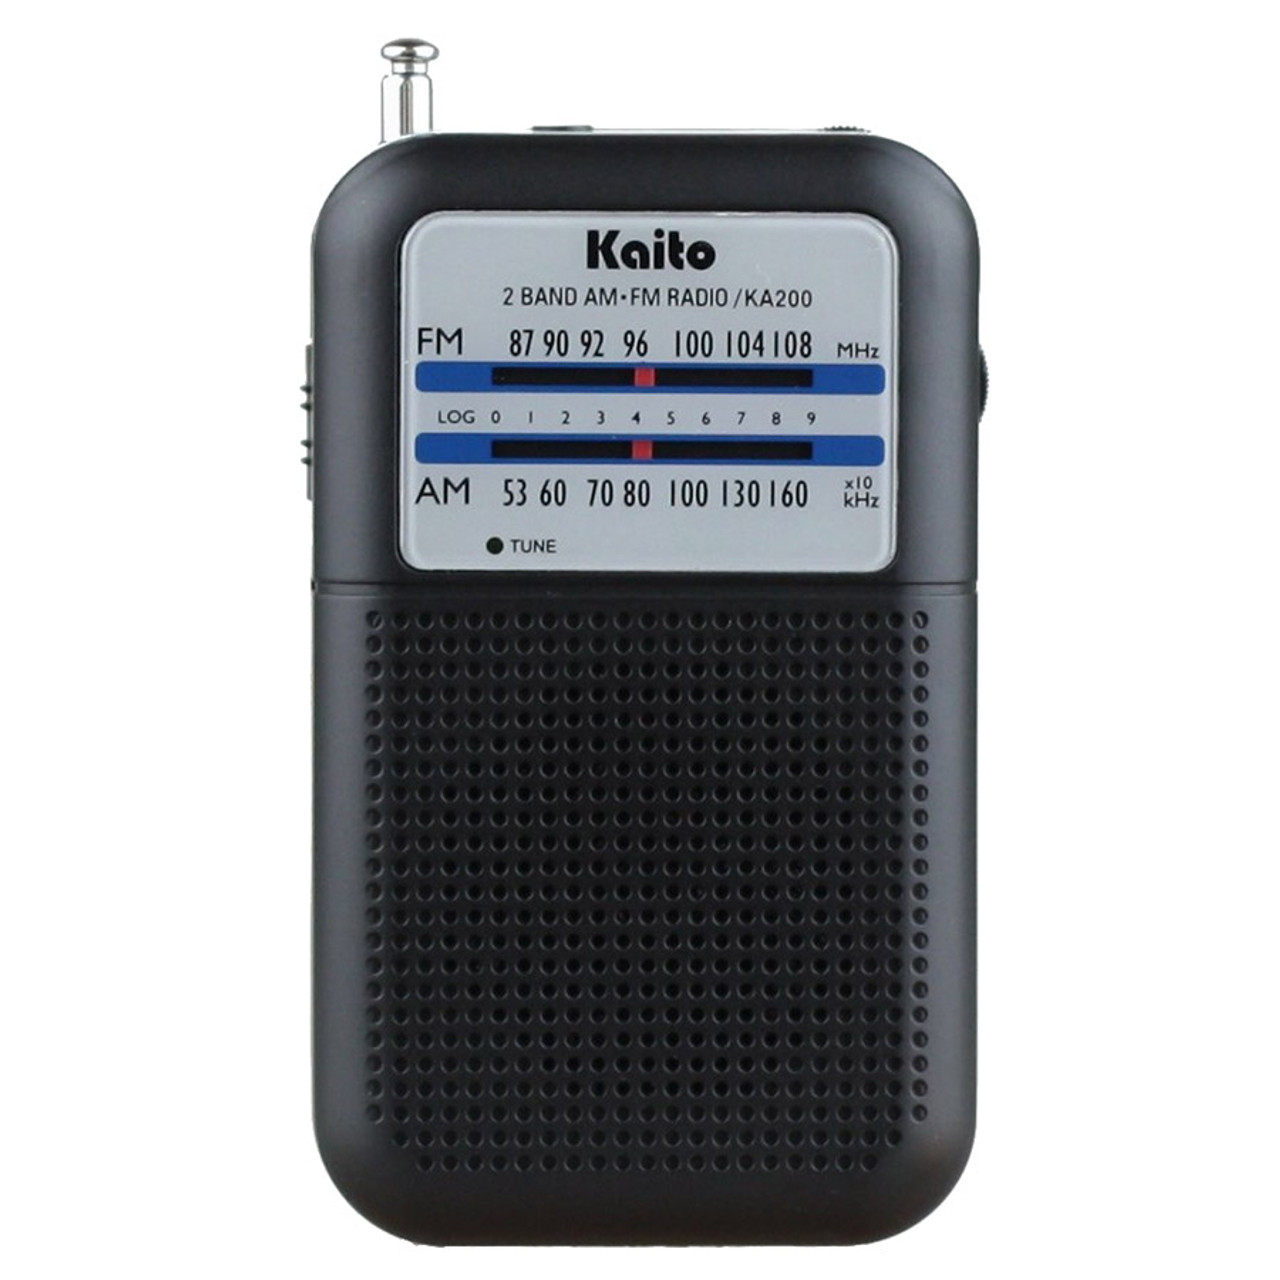 Kaito KA200 AM/FM Pocket Radio - Black - Emergency Radios Walkie Talkies